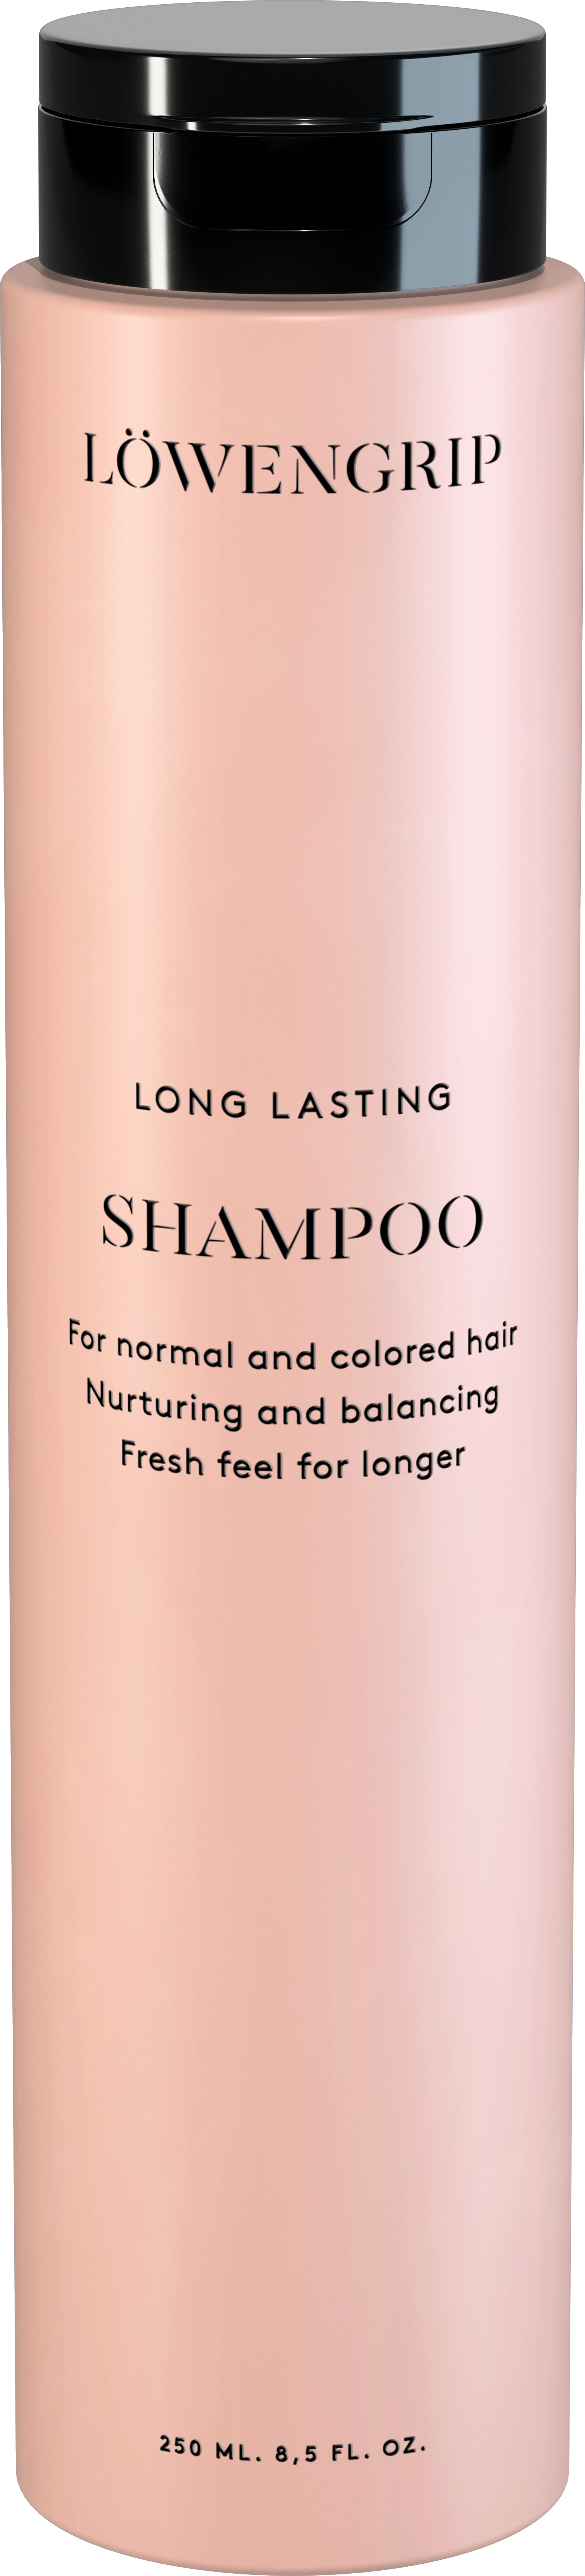 Löwengrip Long Lasting Shampoo